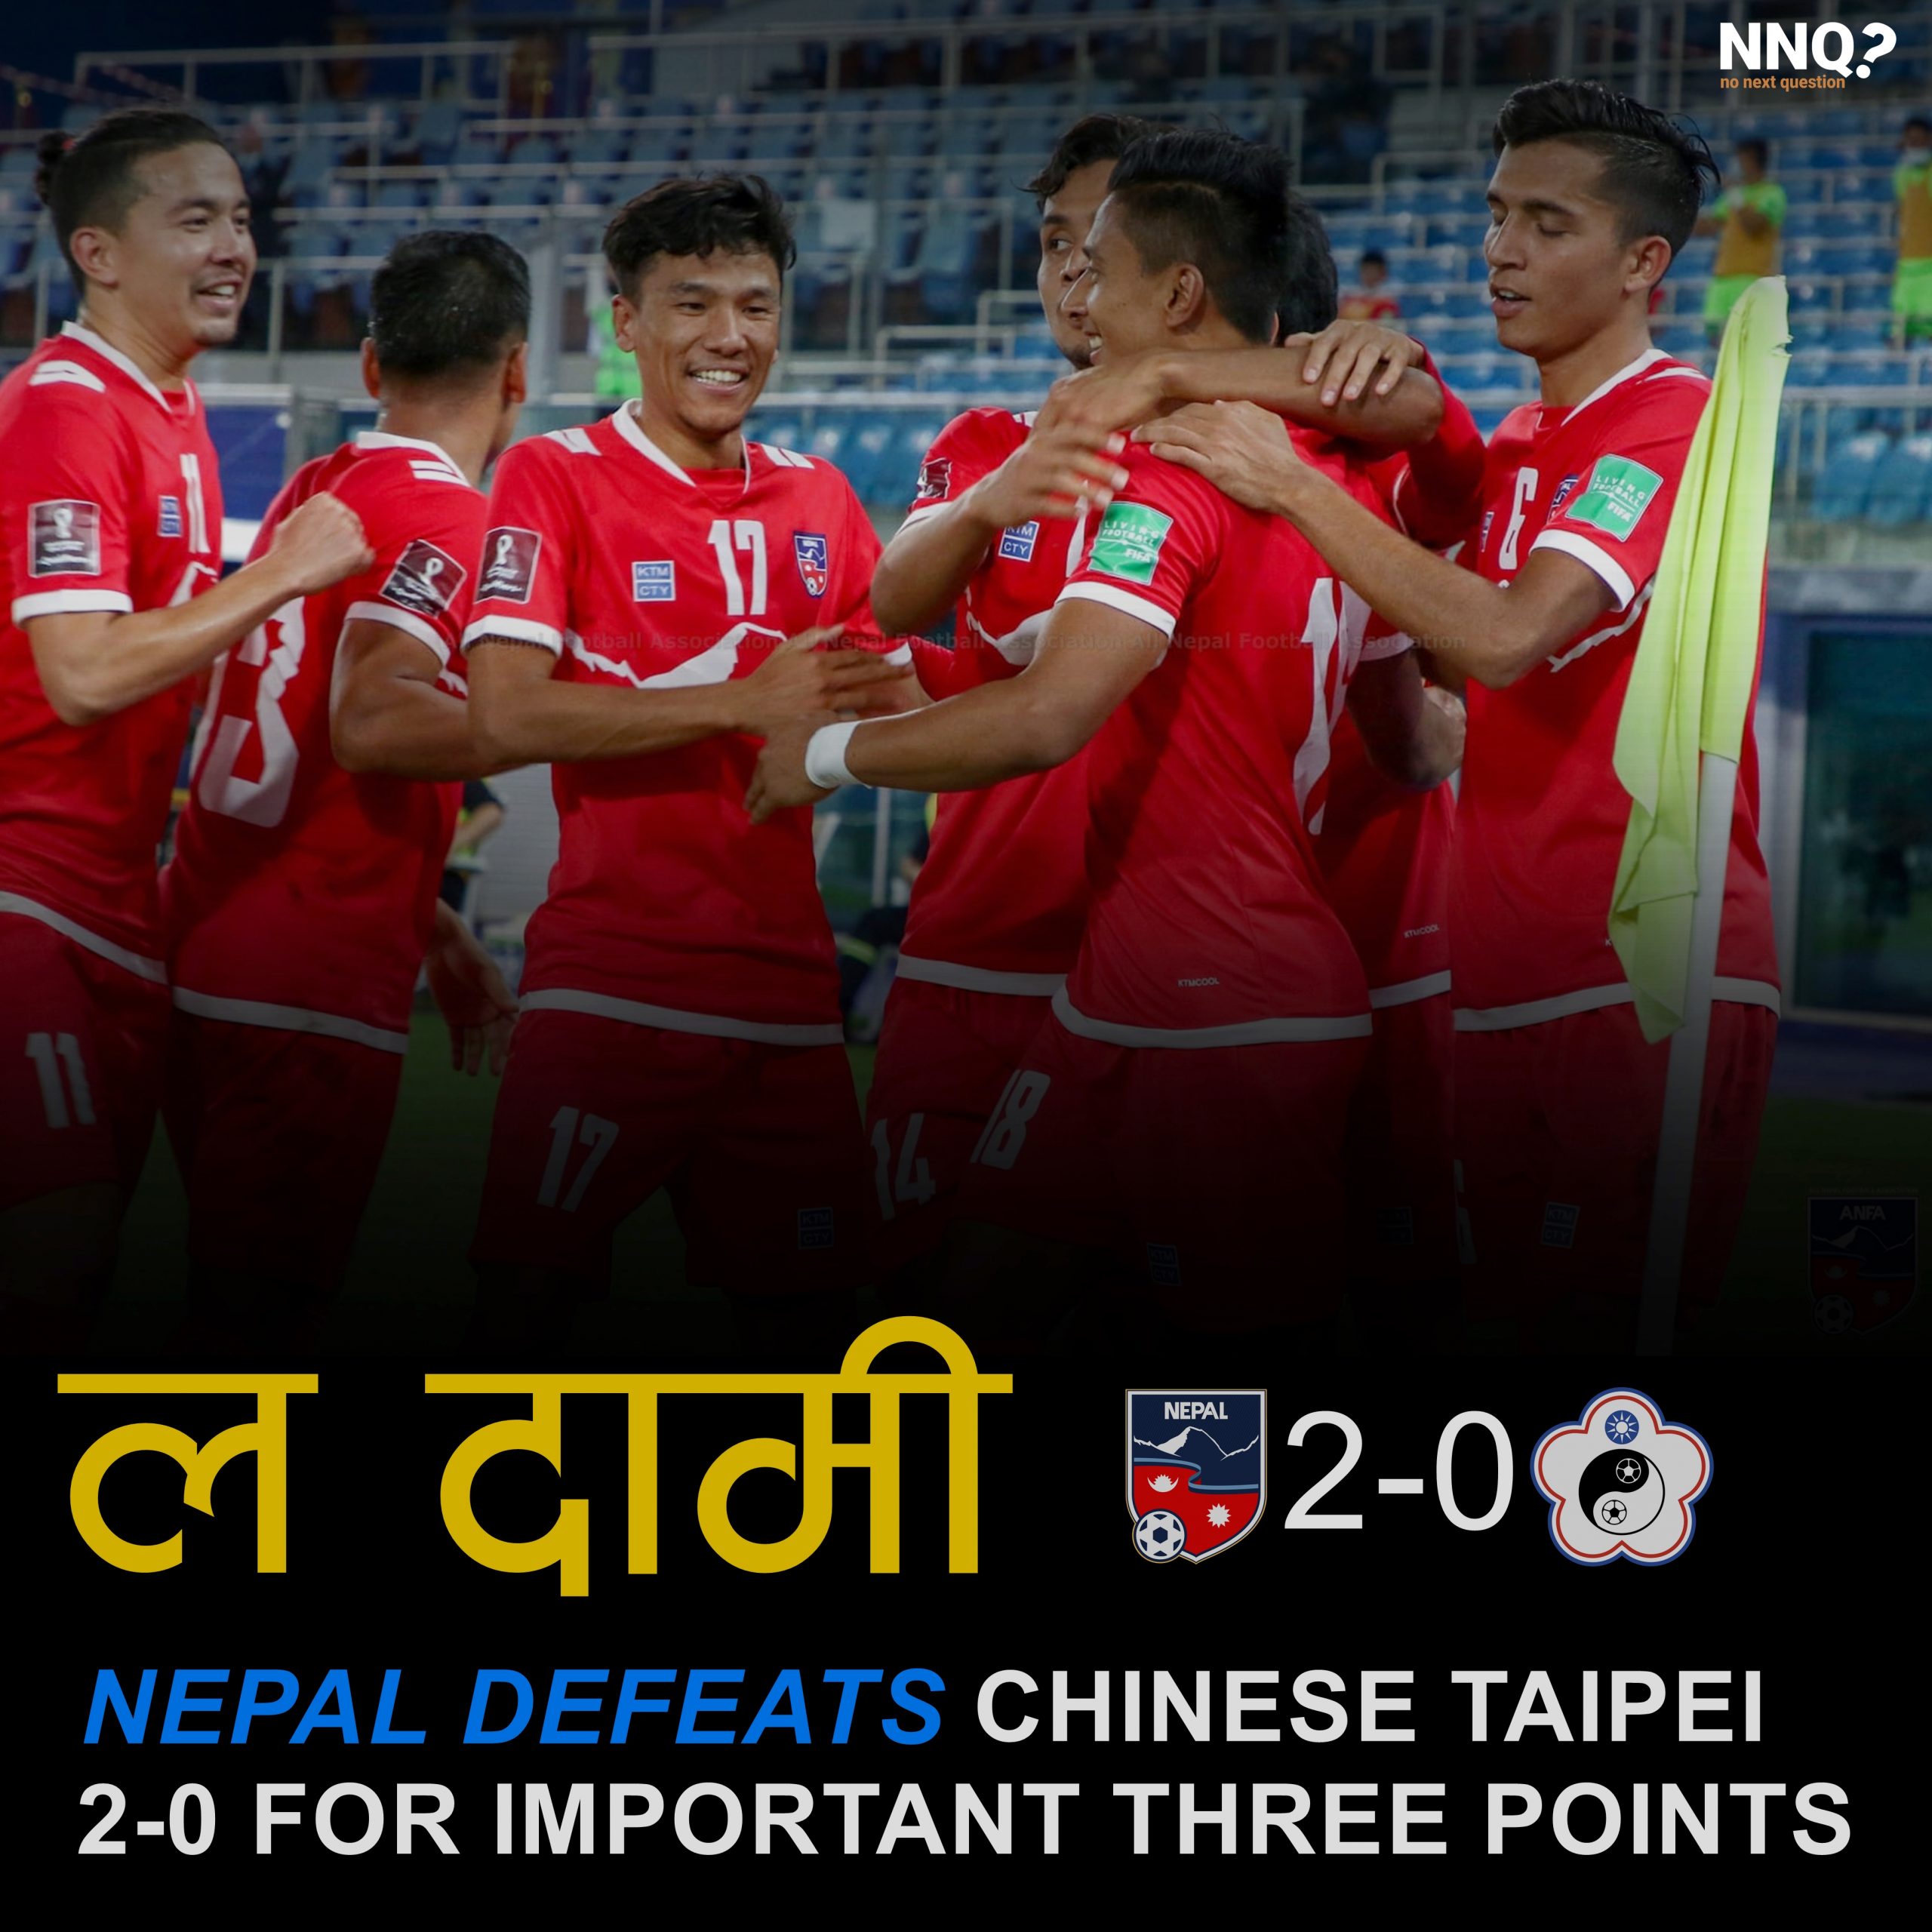 Nepal defeats Chinese Taipei (Taiwan) 2-0